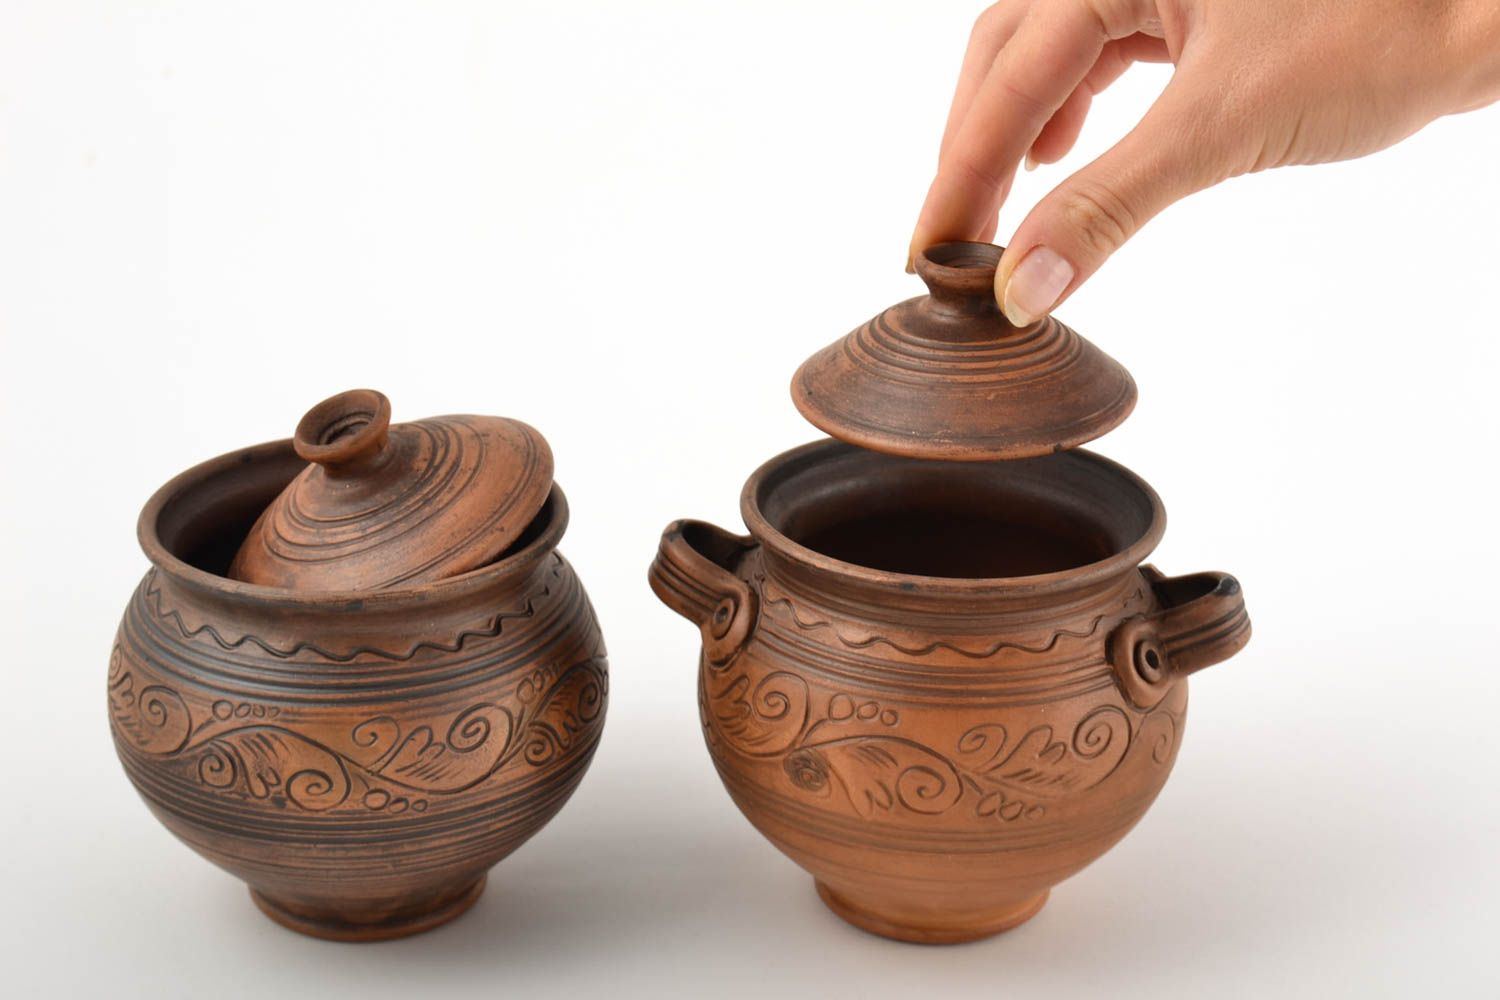 Handmade pot unusual pot for baking kitchen utensils unusual pot decor ideas photo 5